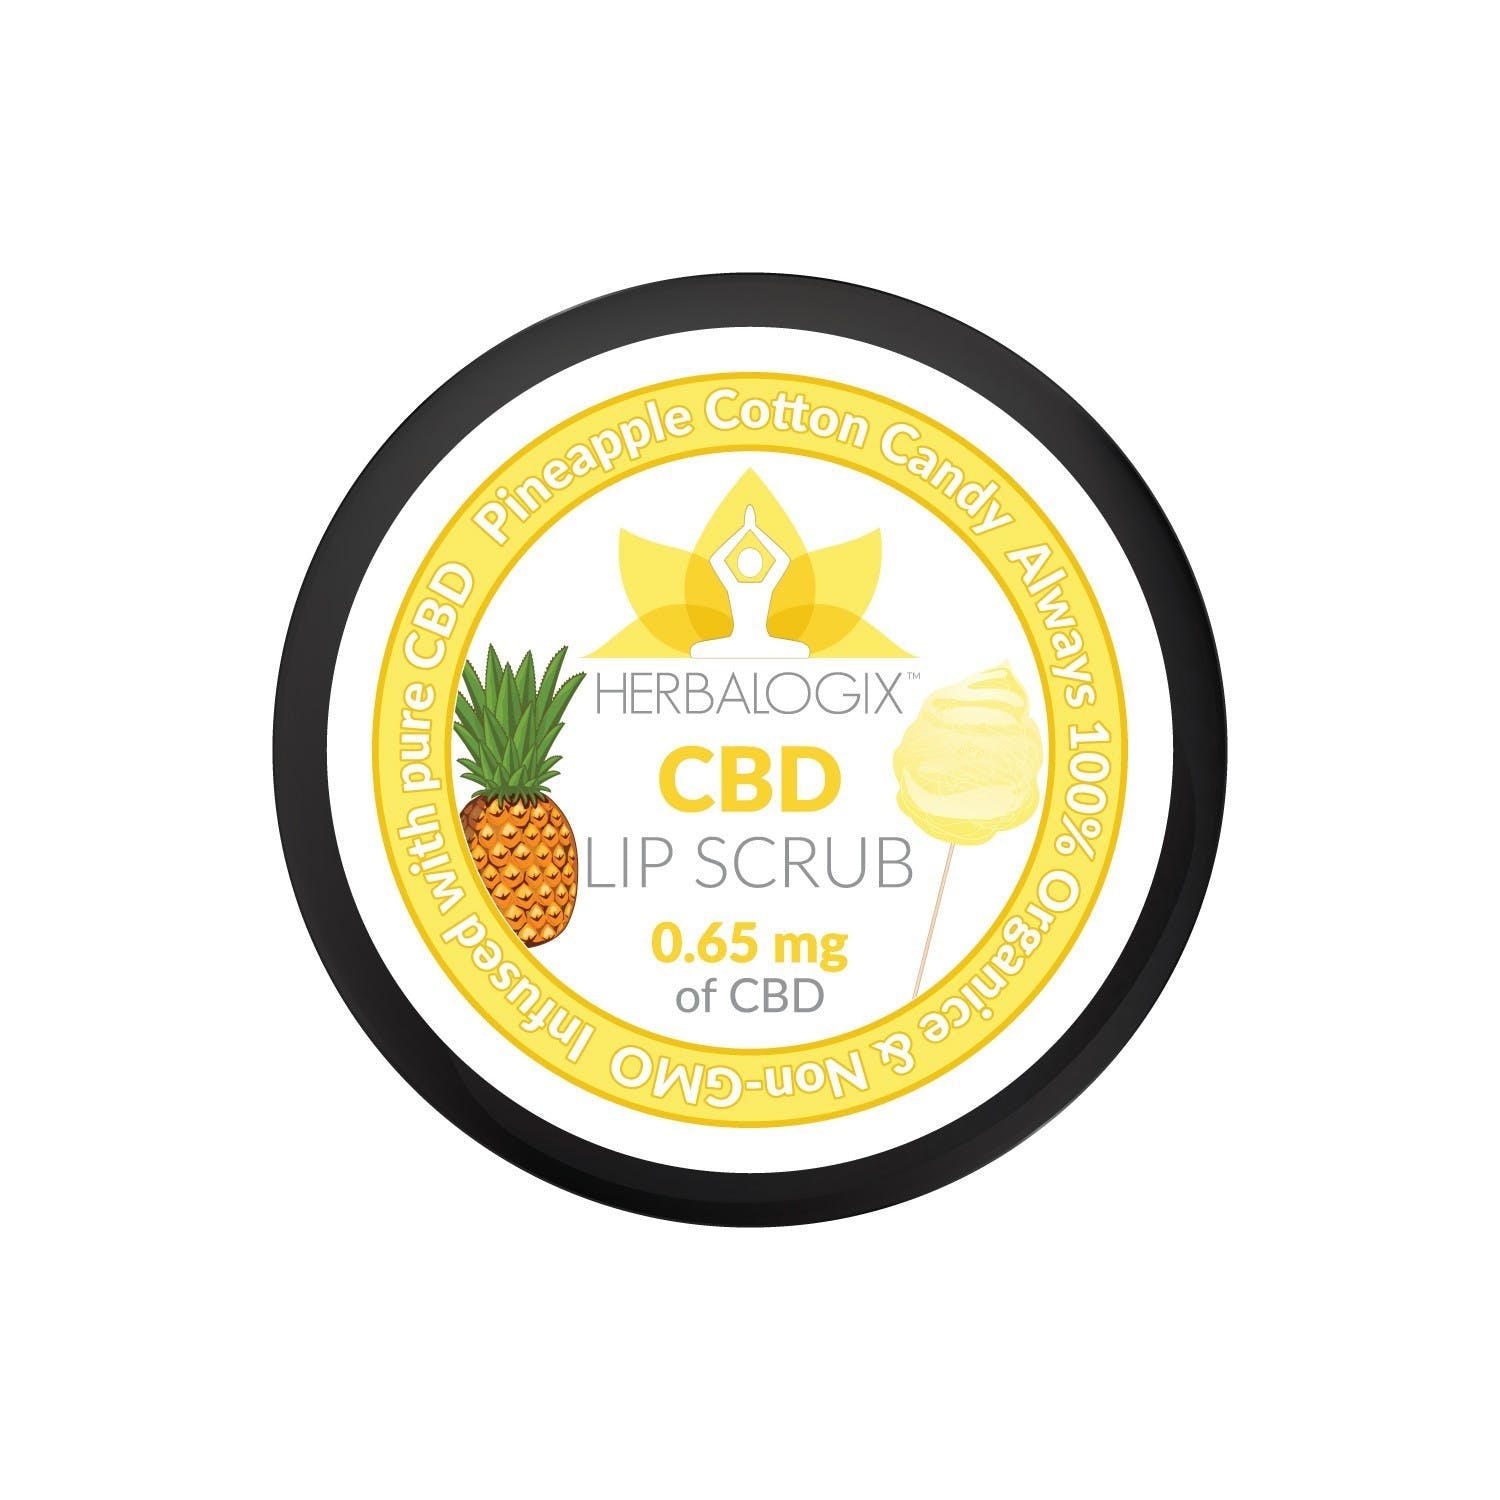 Herbalogix CBD Lip Scrub - Pineapple Cotton Candy